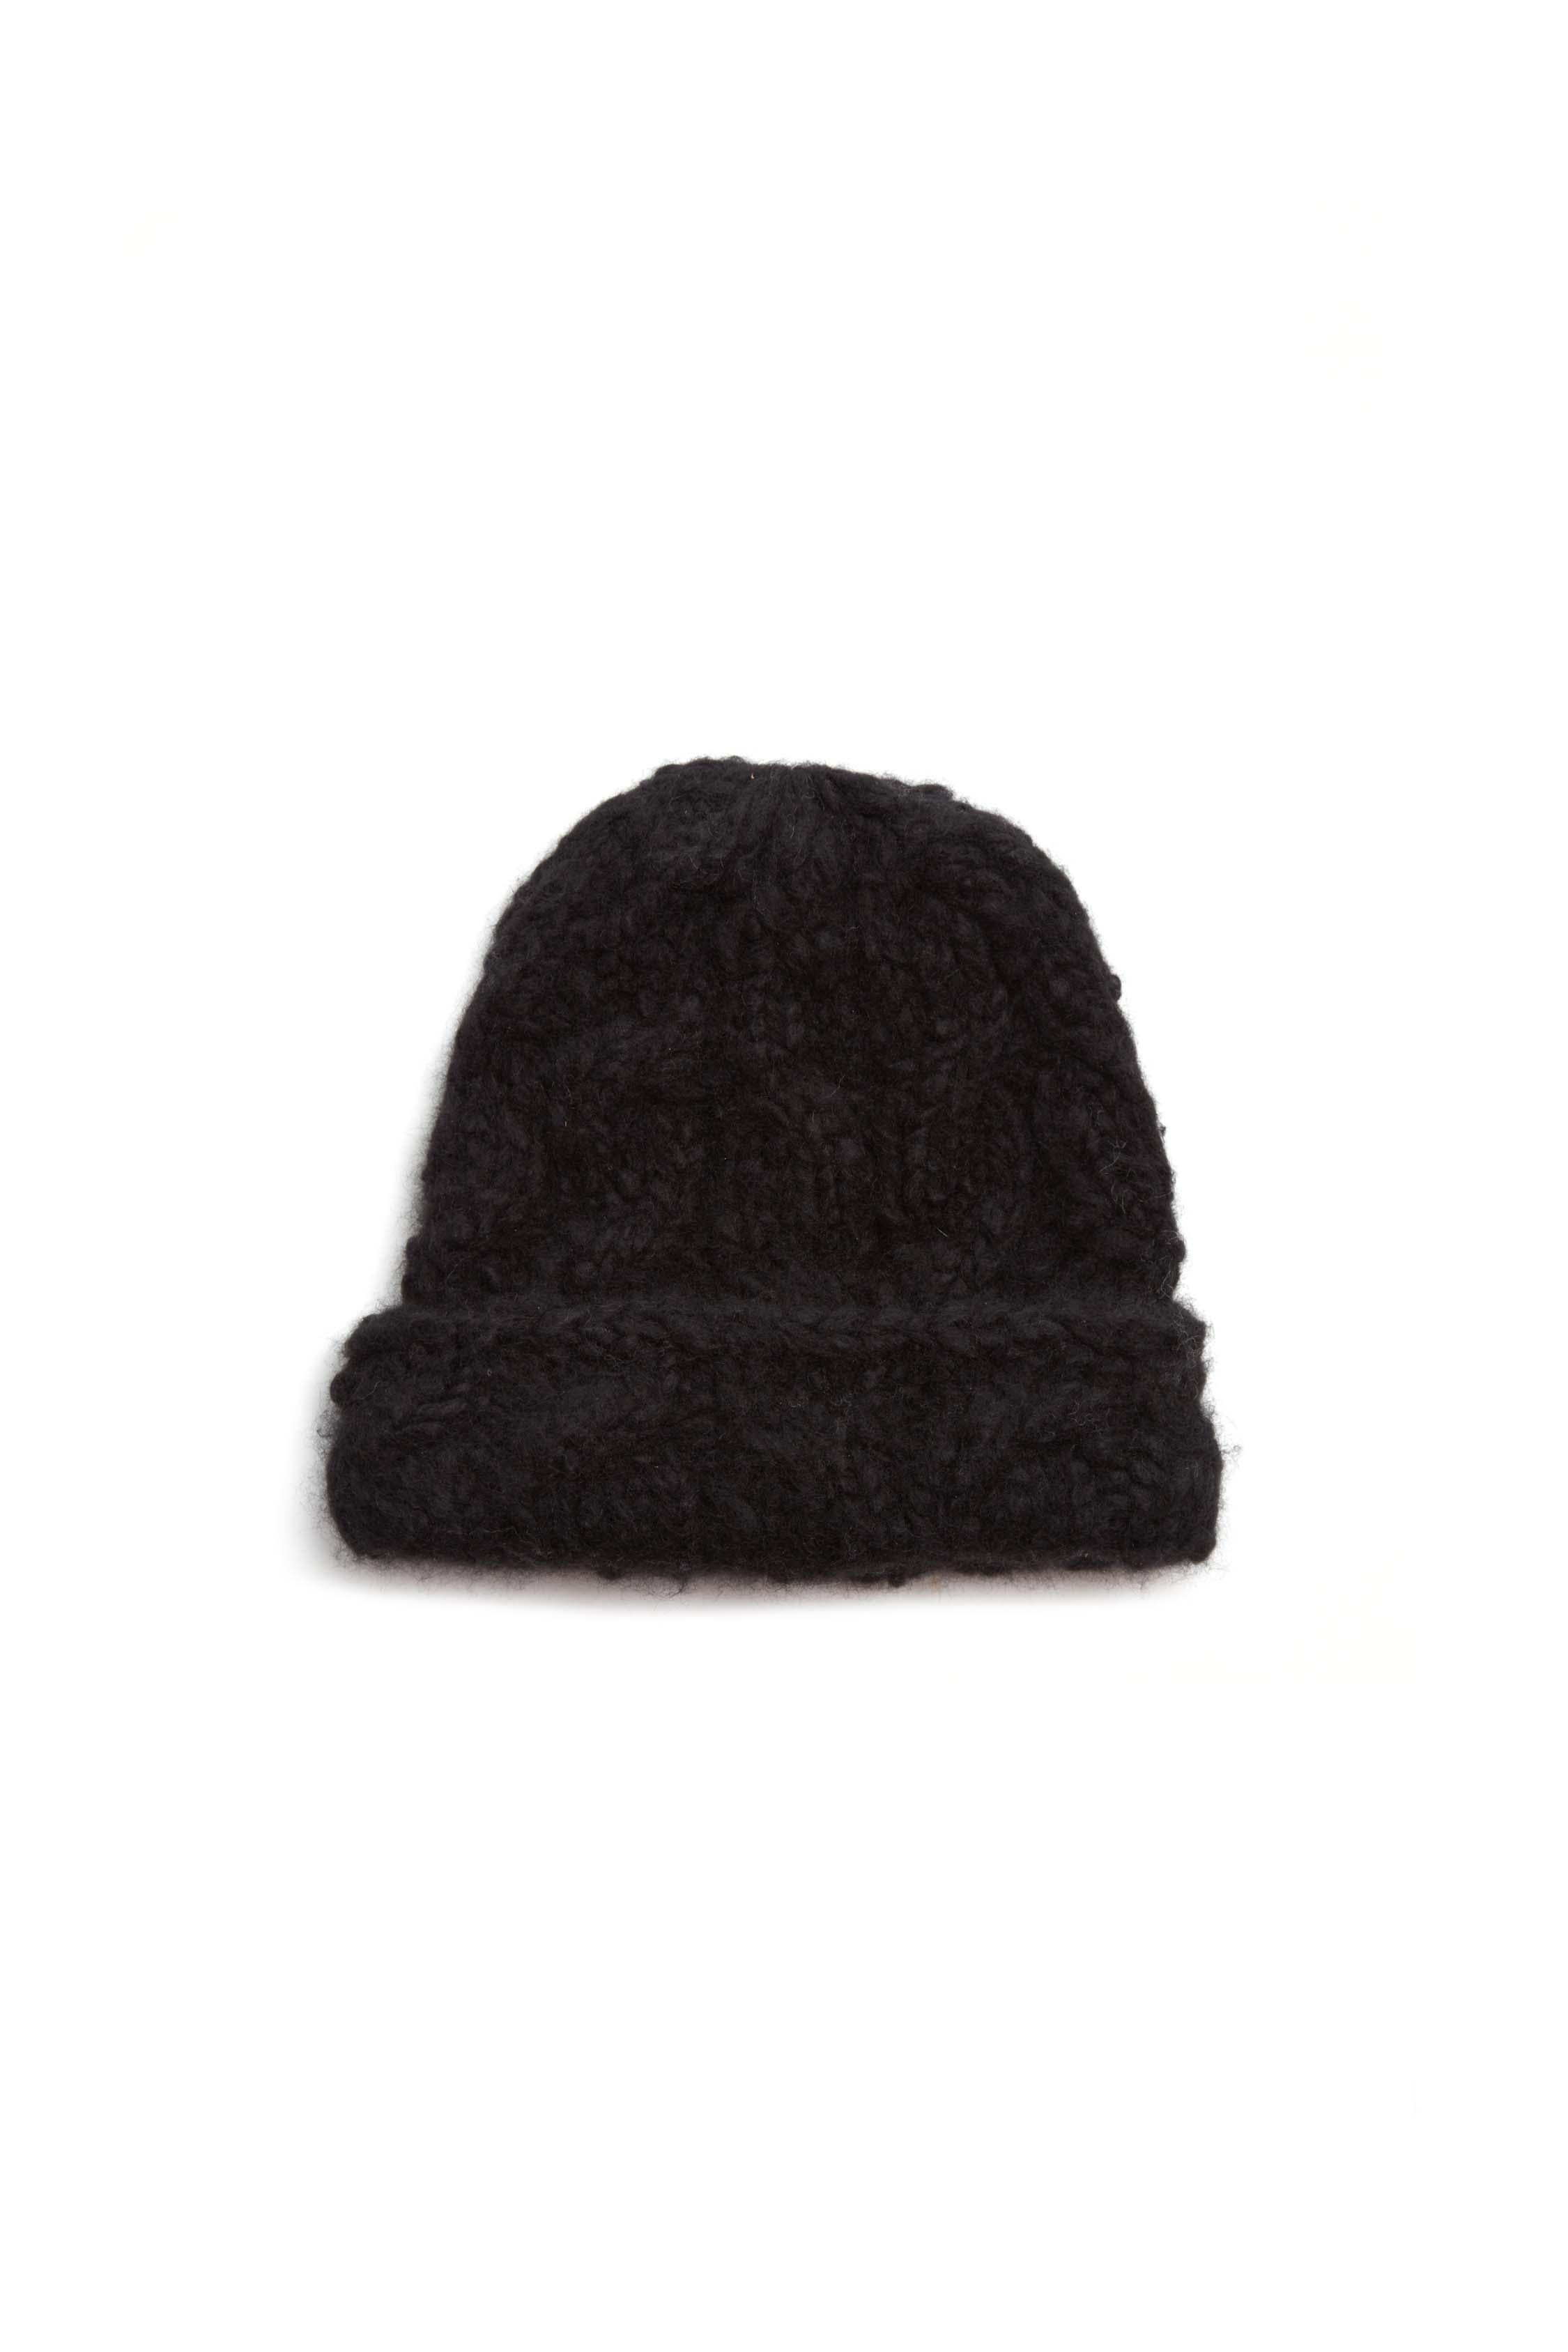 Silva Hat in Black Welfat Cashmere - 1